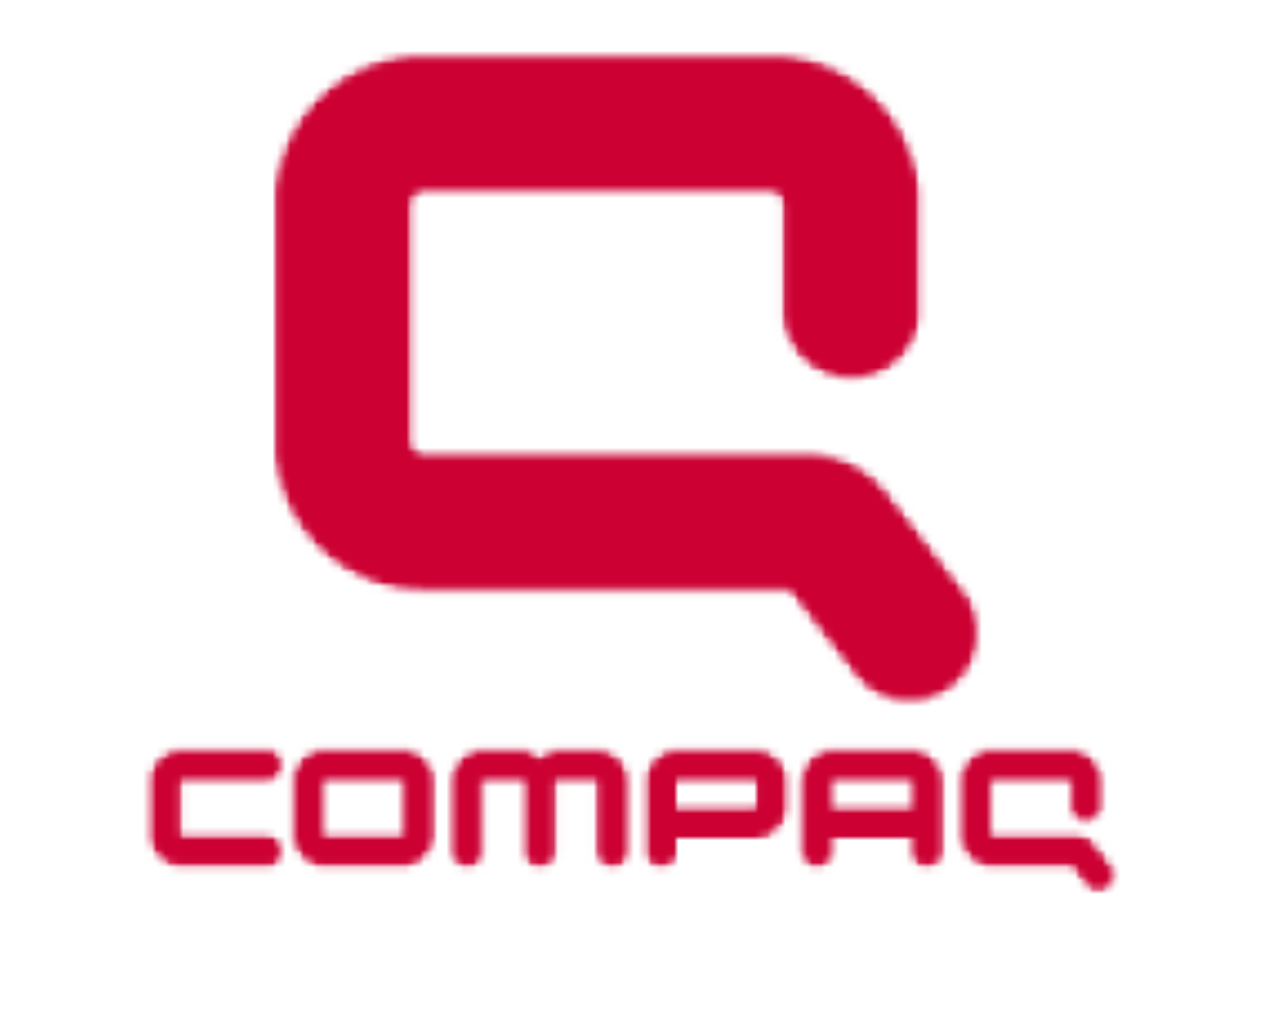 New Compaq Logo - പ്രമാണം:Compaq logo new.svg - വിക്കിപീഡിയ